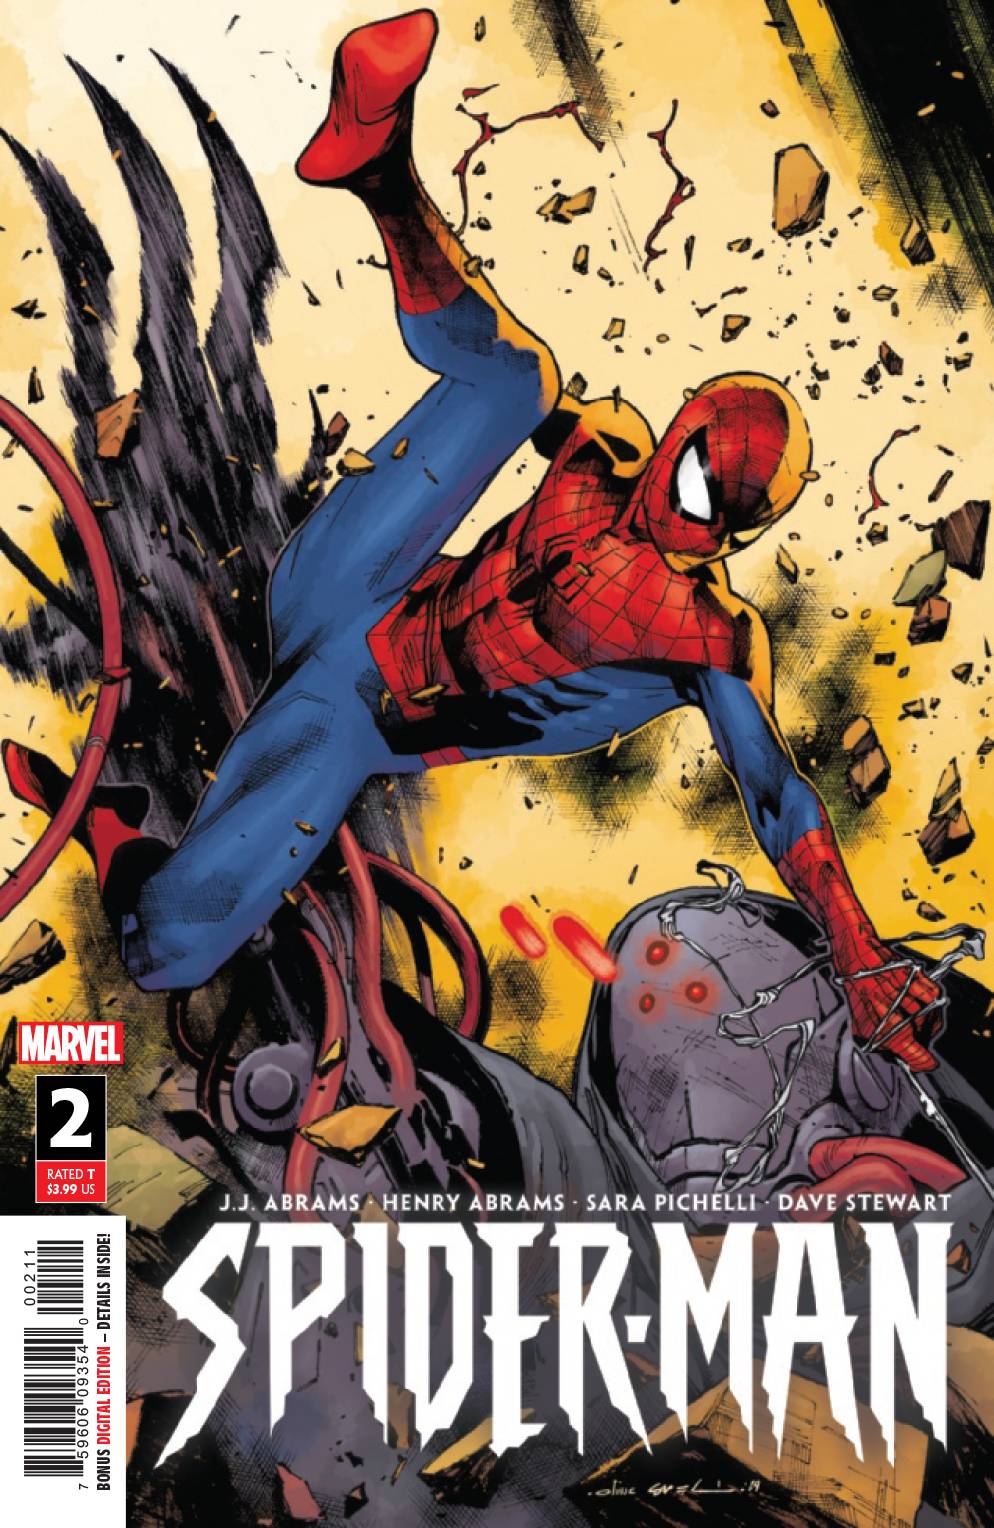 SPIDER-MAN #2 (OF 5) Olivier Coipel JJ Abrams (10/16/2019) Marvel